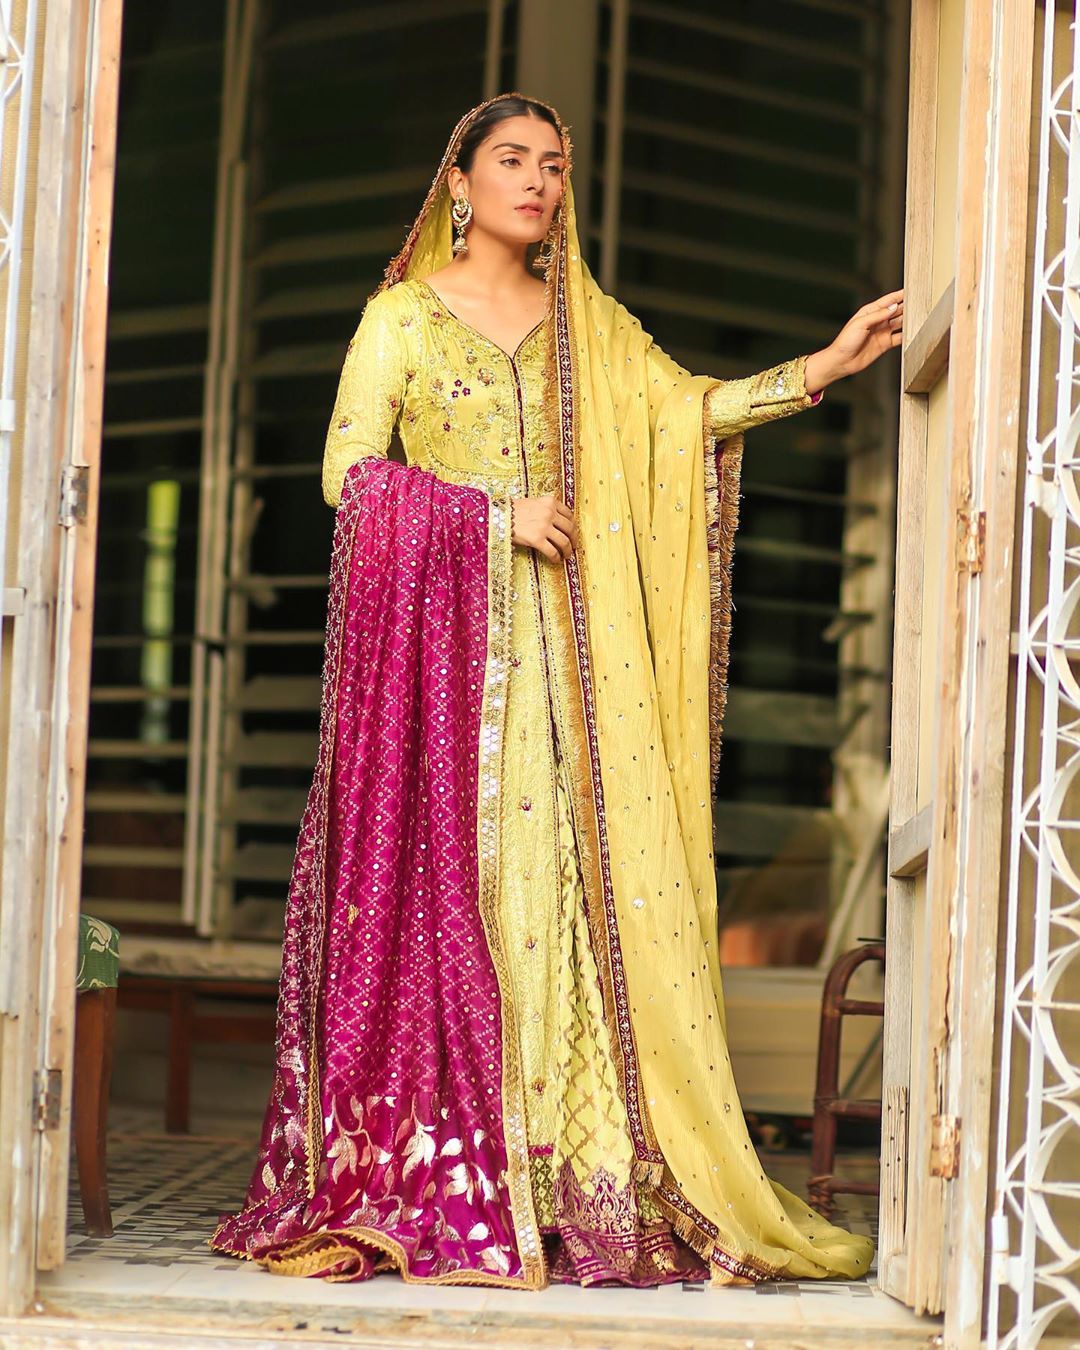 Ayeza Khan on the Sets of her Drama Mehar Posh